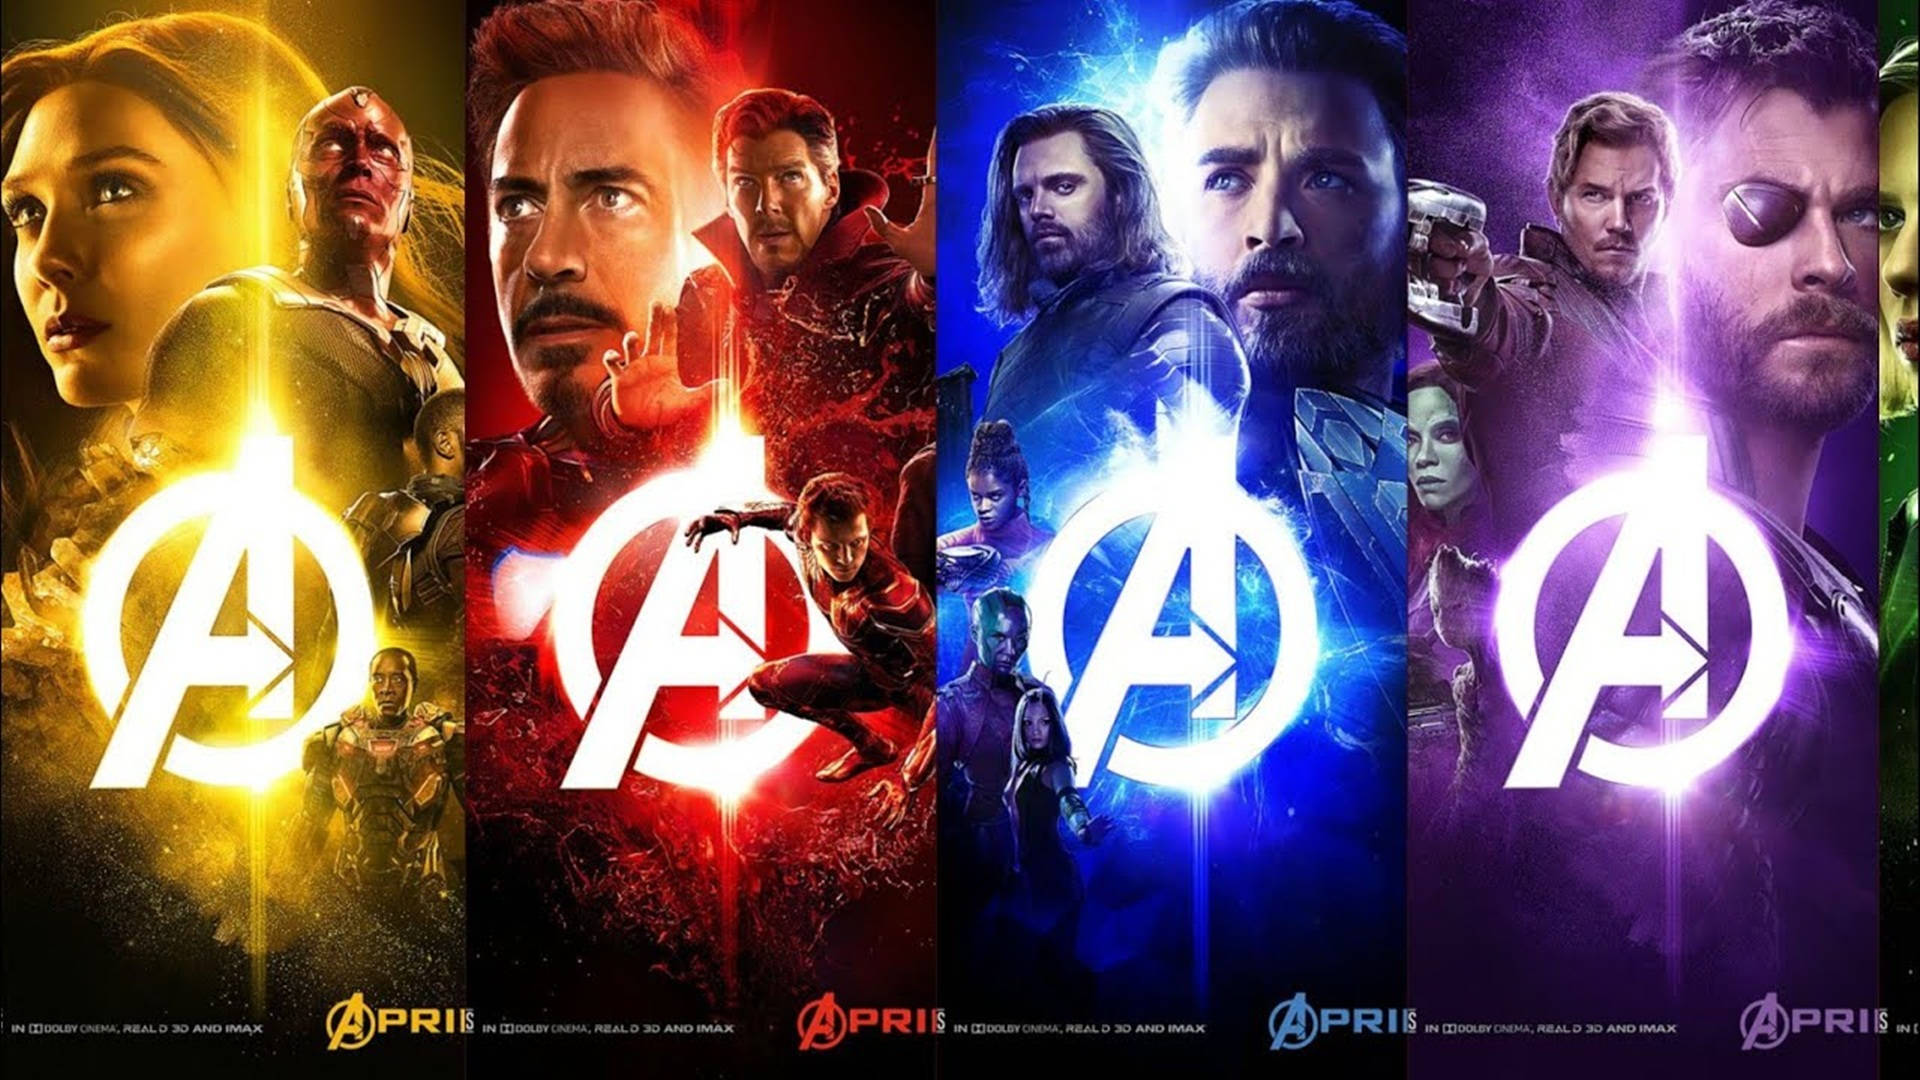 Earth's Mightiest Heroes United | Avengers Endgame Wallpaper